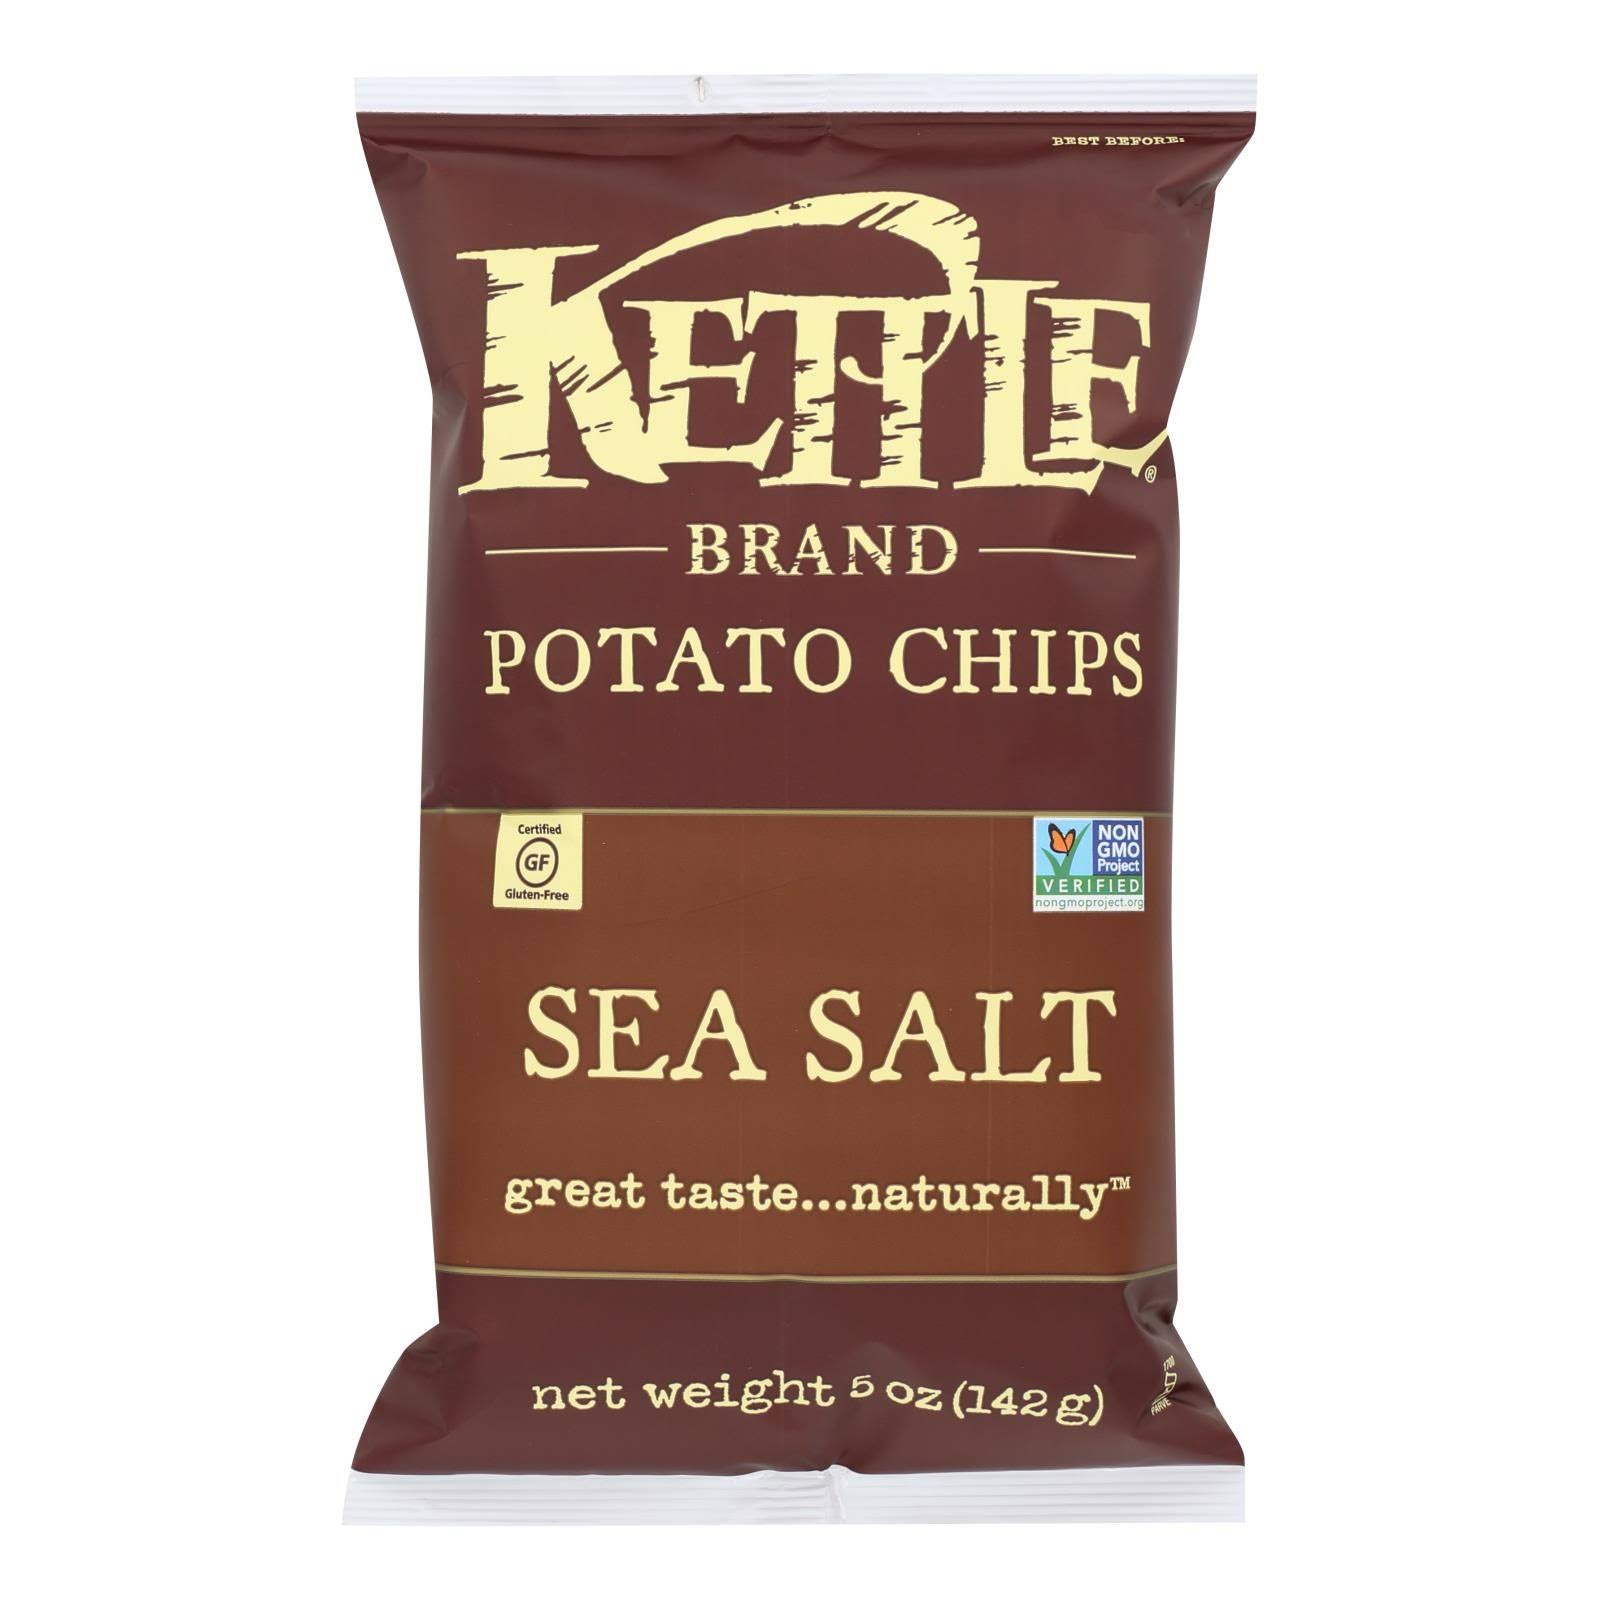 Kettle Brand Potato Chips - Sea Salt, 5 oz